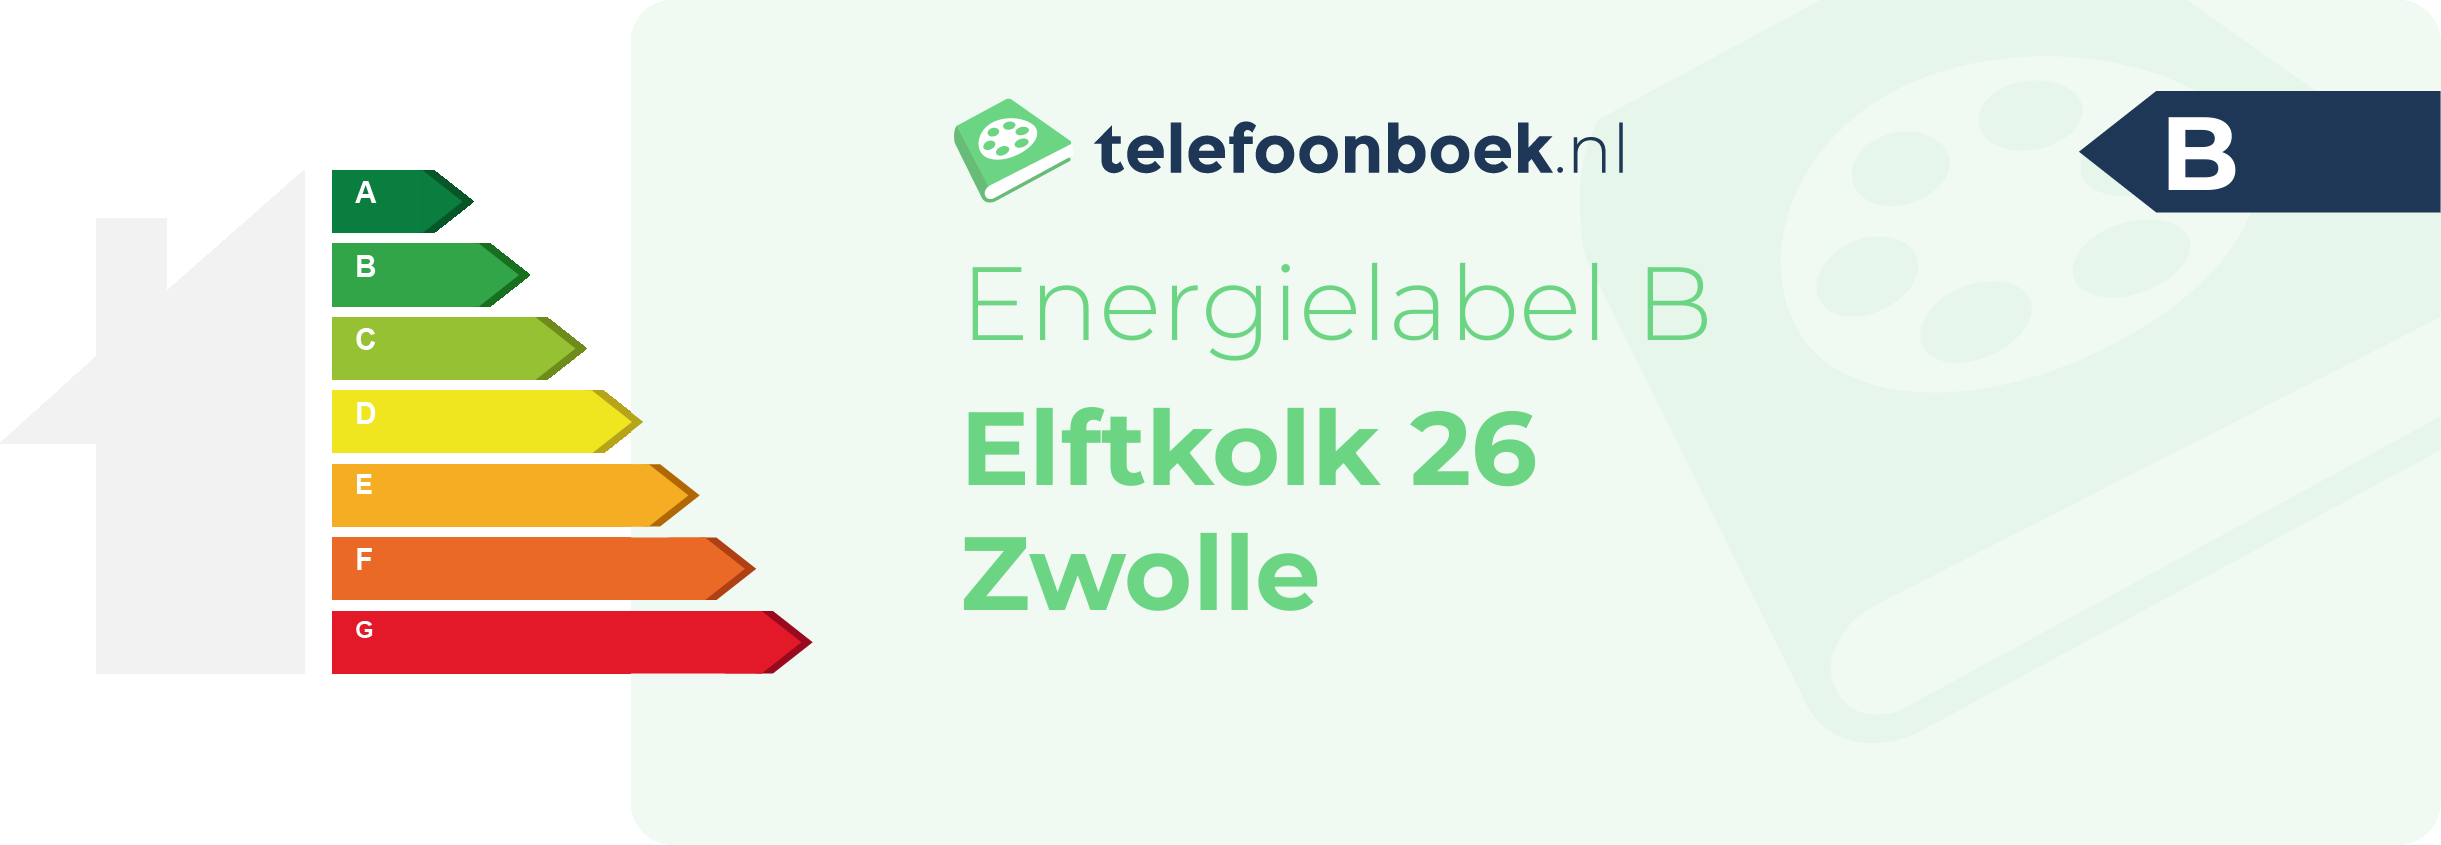 Energielabel Elftkolk 26 Zwolle